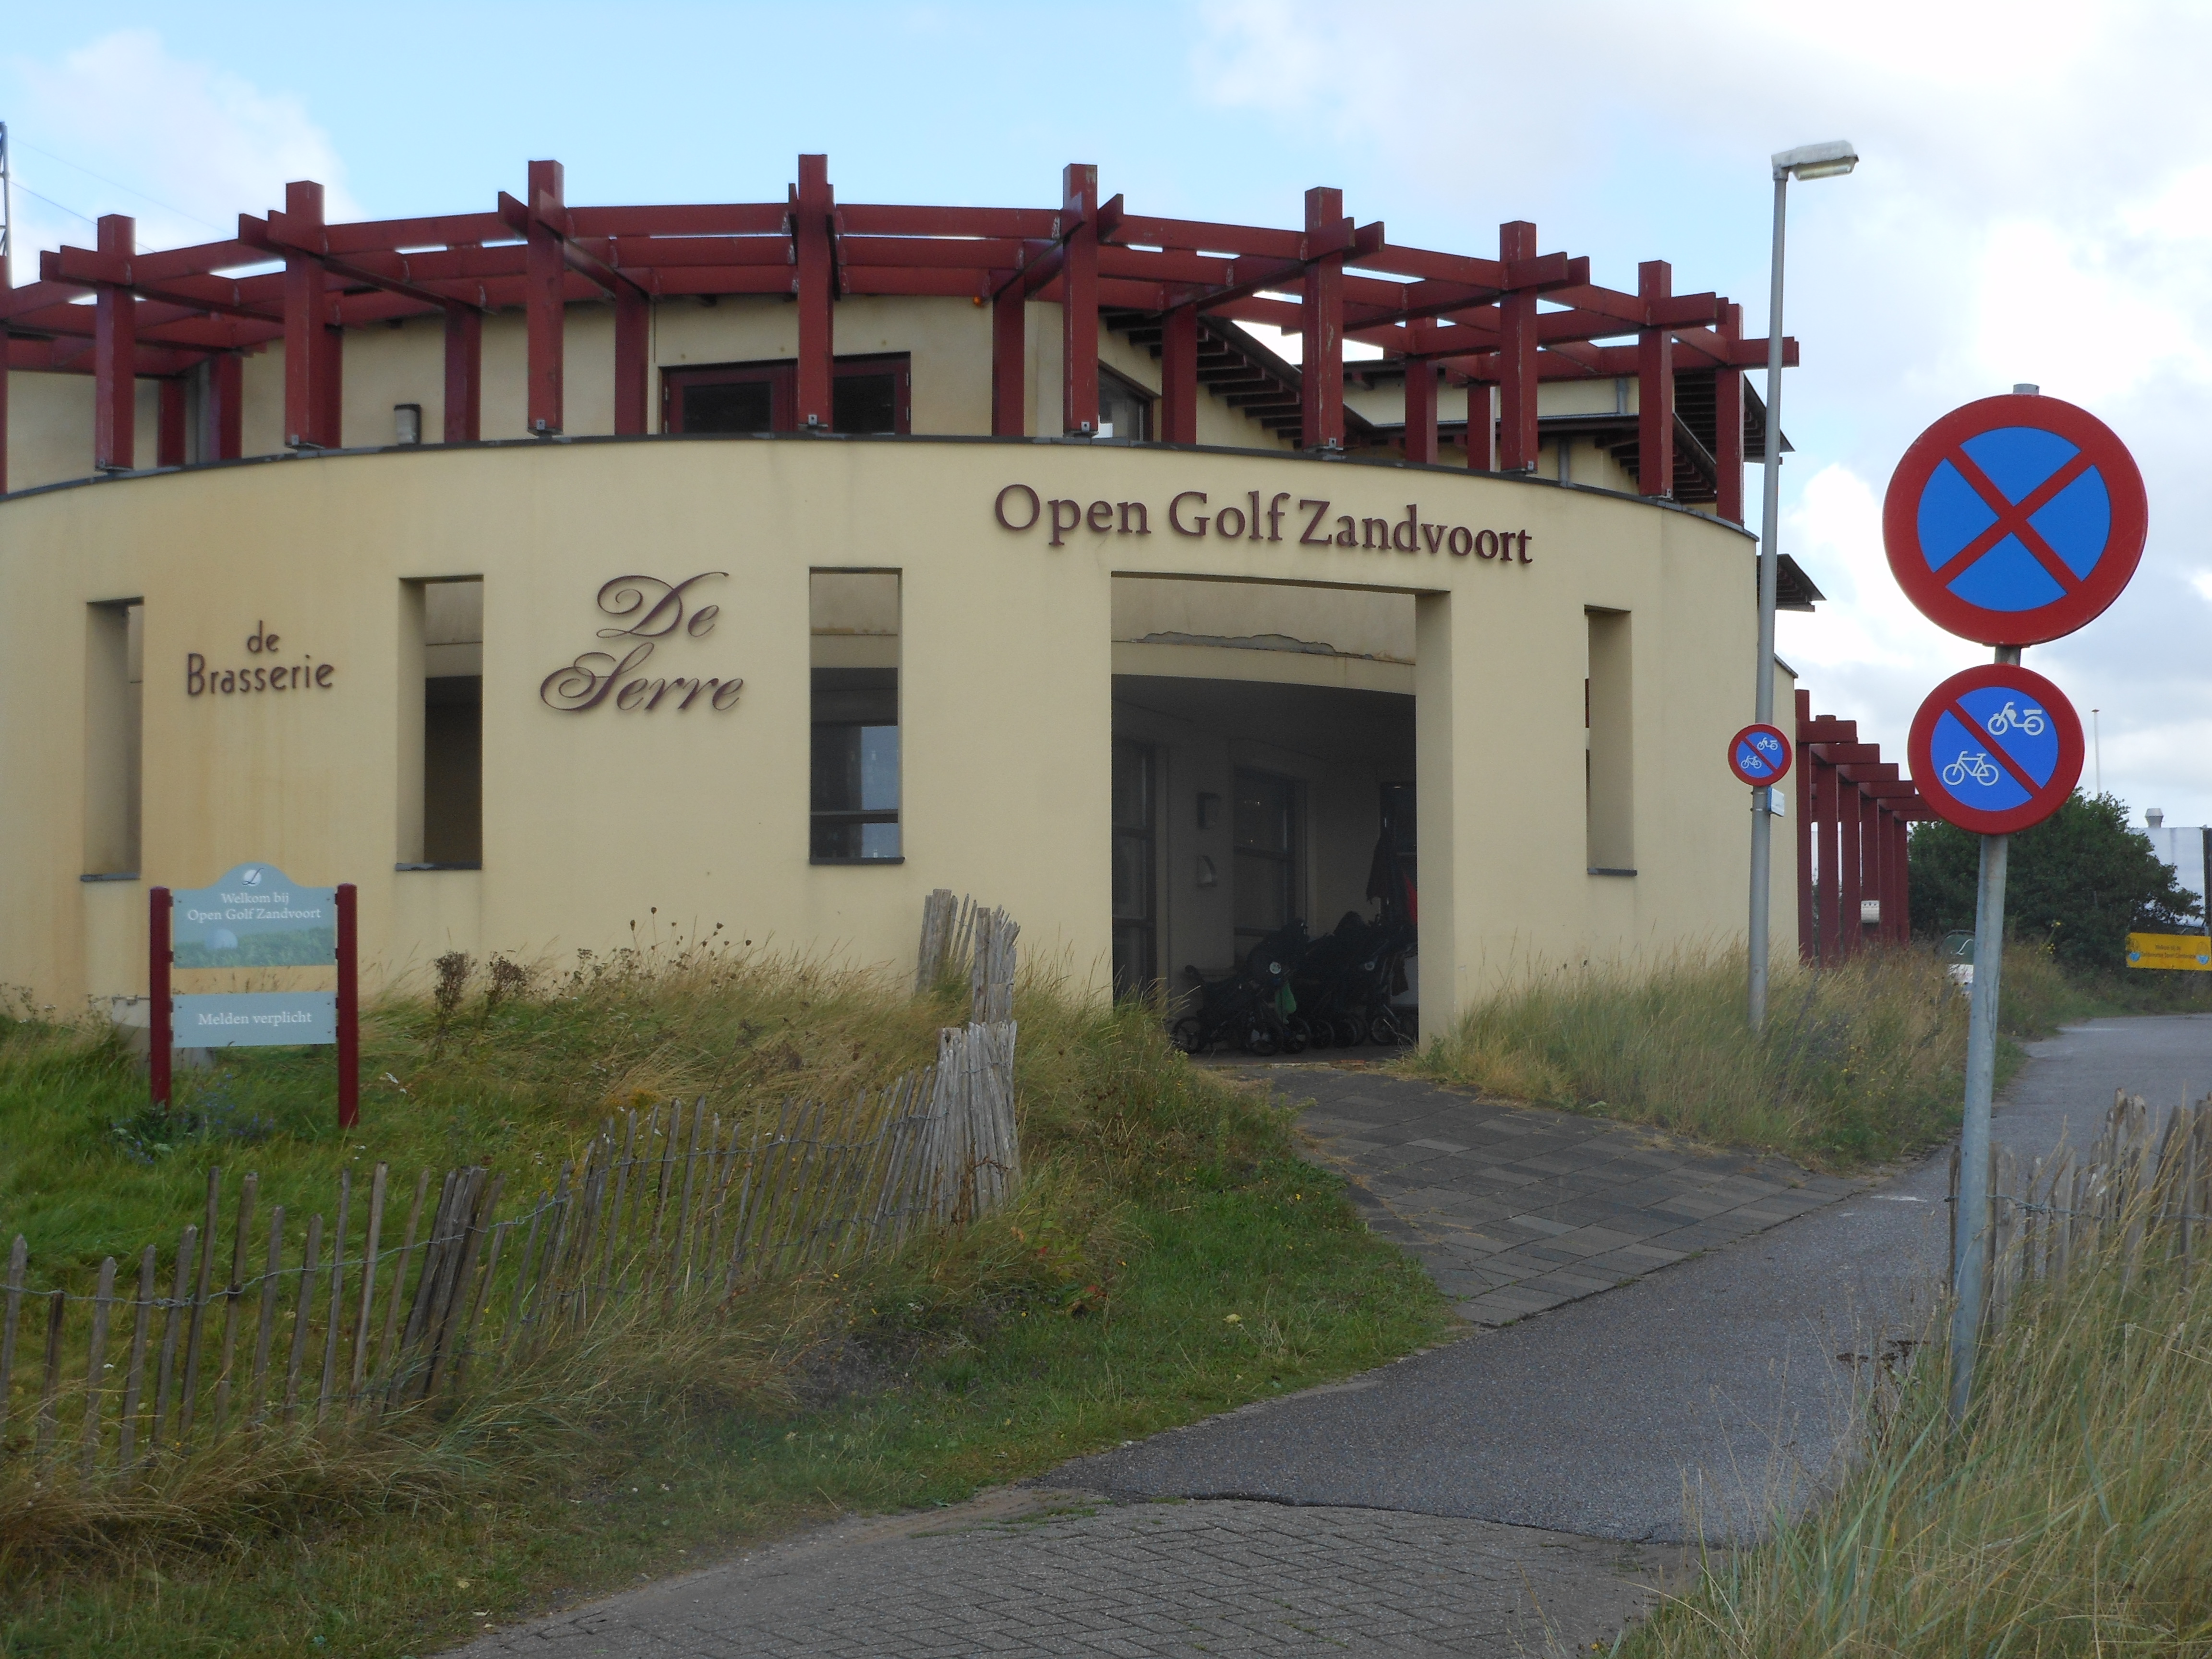 Open Golf Zandvoort